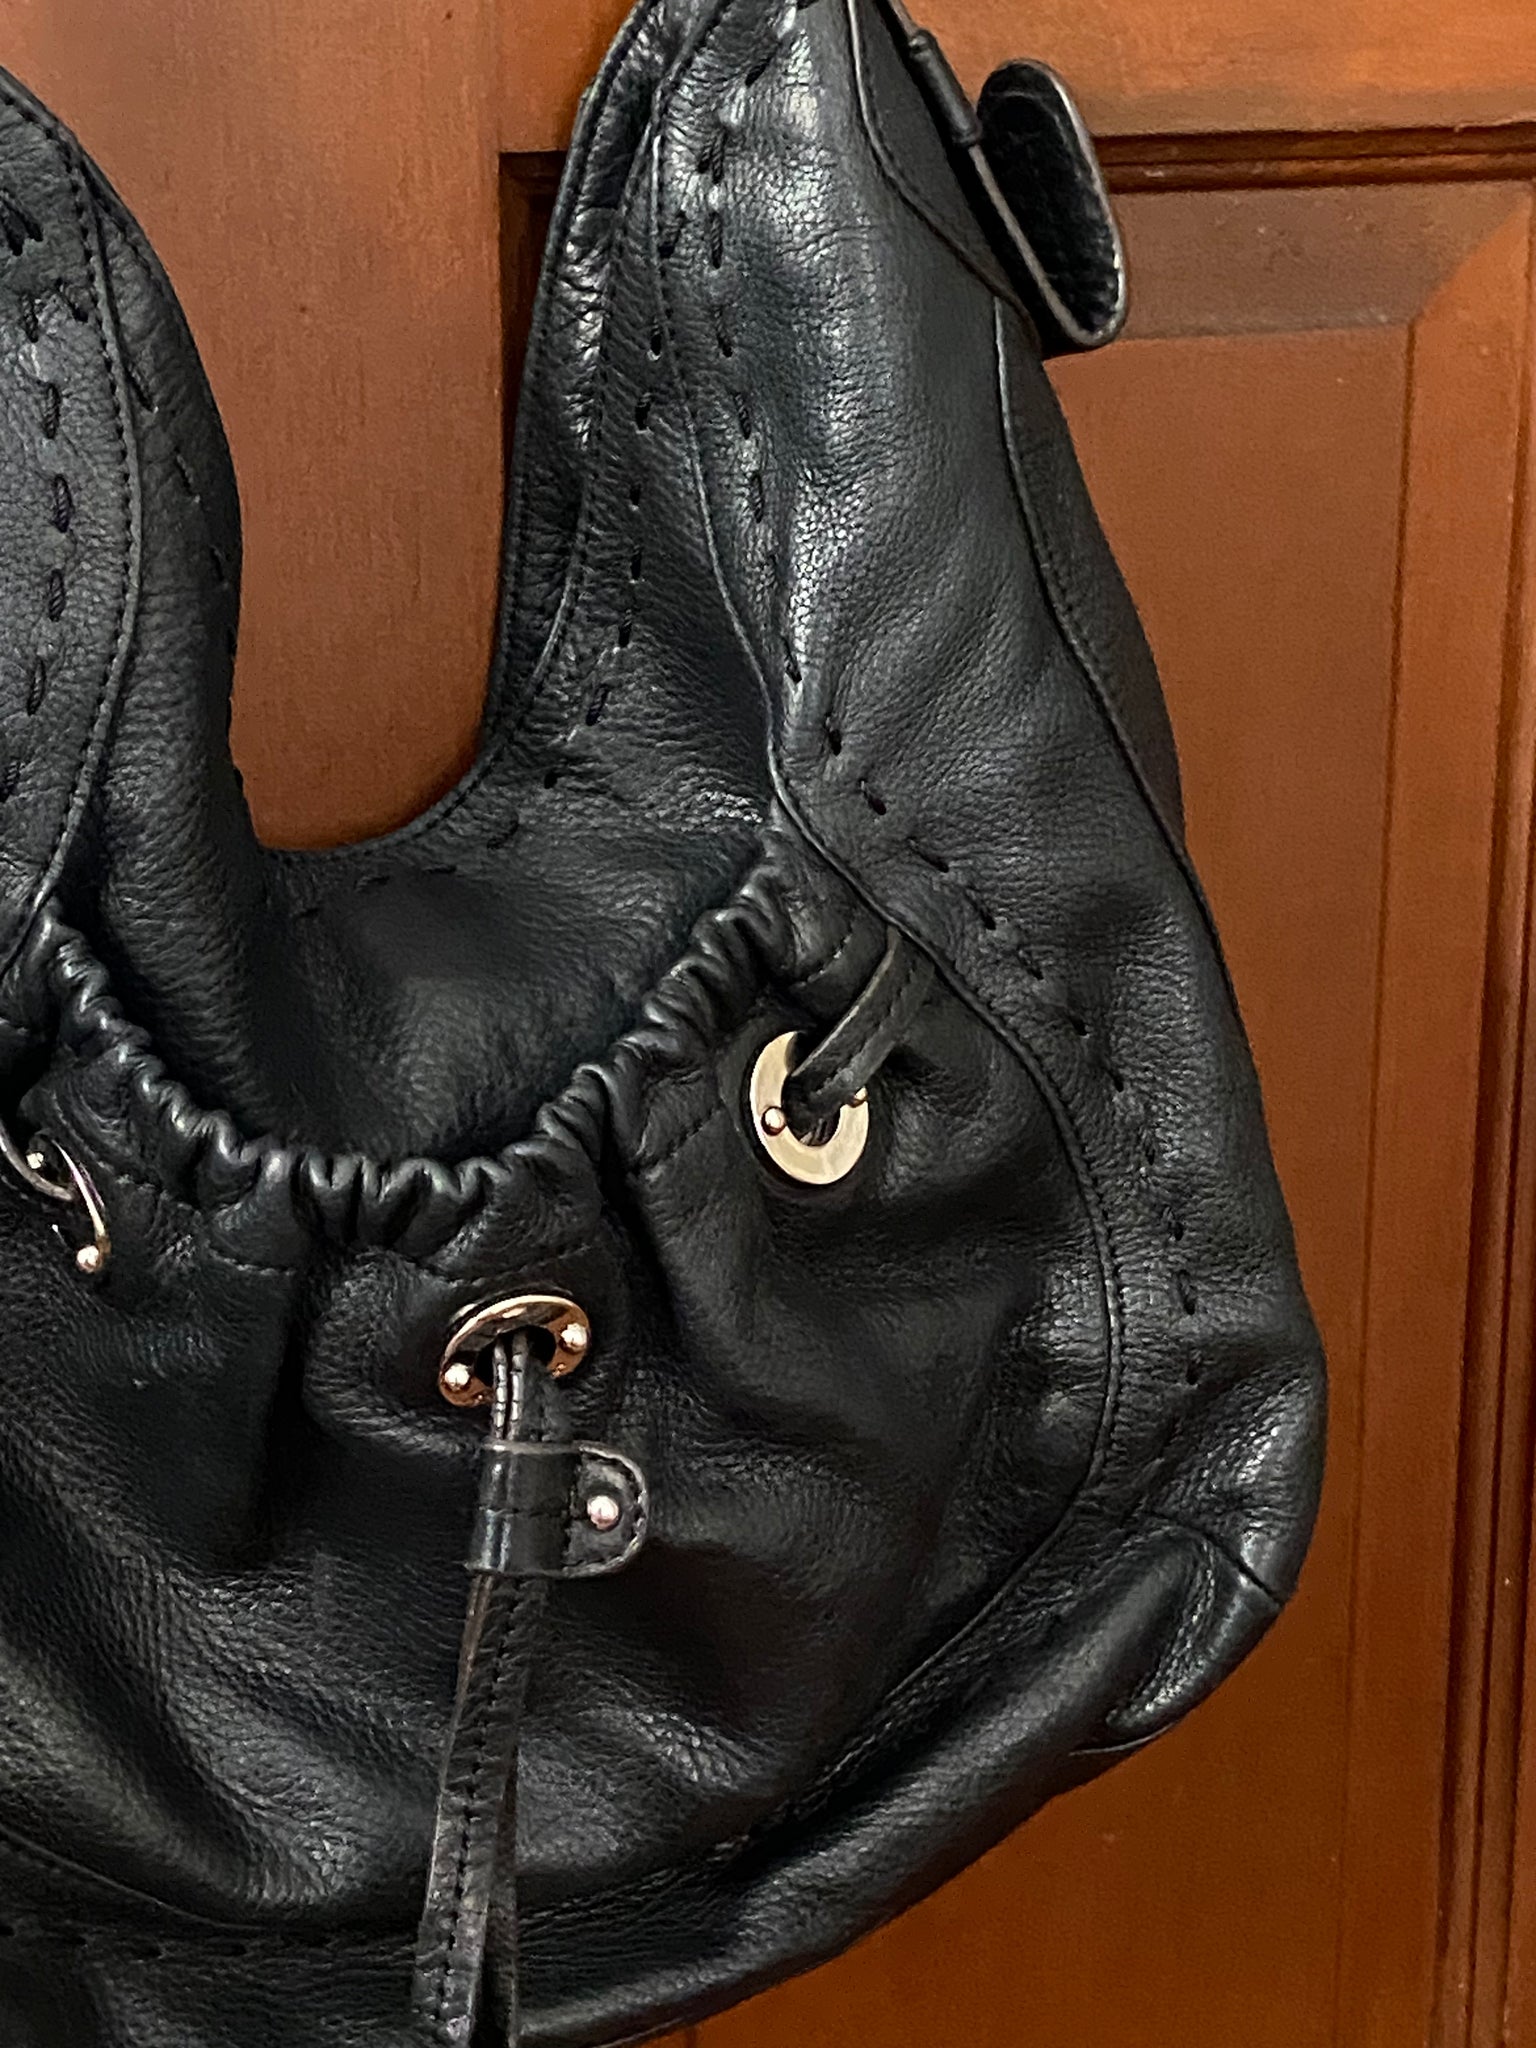 Laredo Embossed Leather Handbag - Buy This Boho Purse| Jewelry Junkie – The  Jewelry Junkie